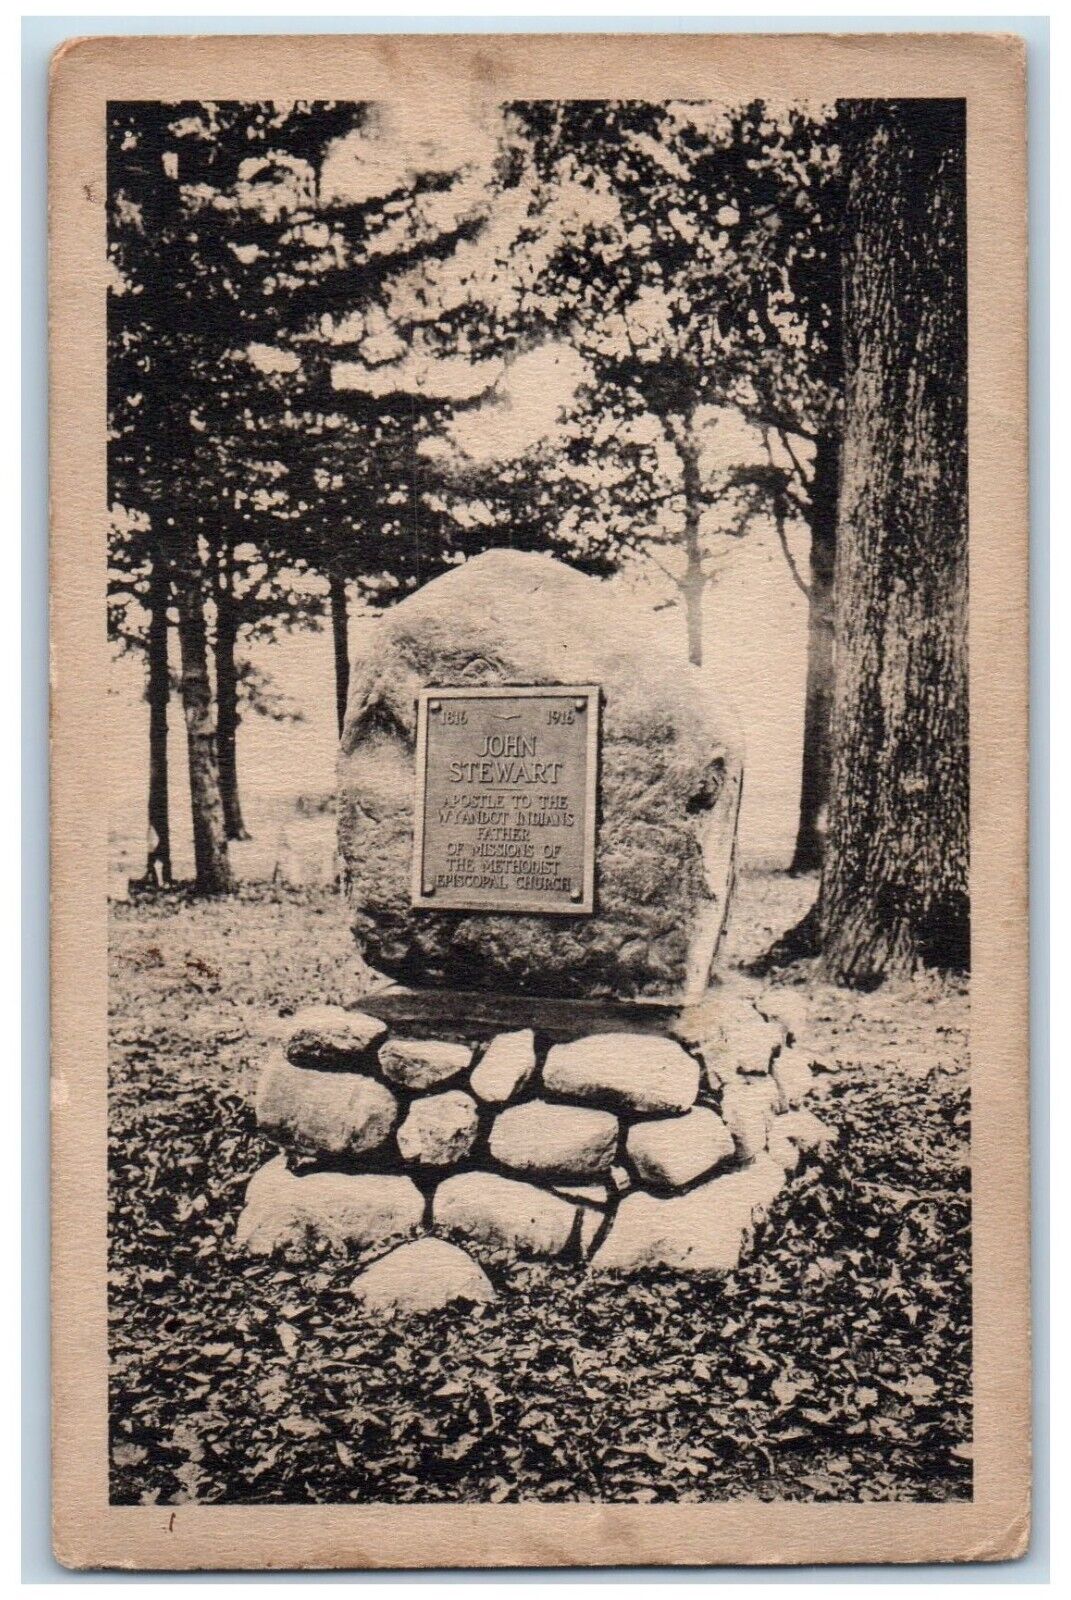 c1920 John Stewart Monument Wyandot Mission Grounds Rock Sandusky Ohio Postcard